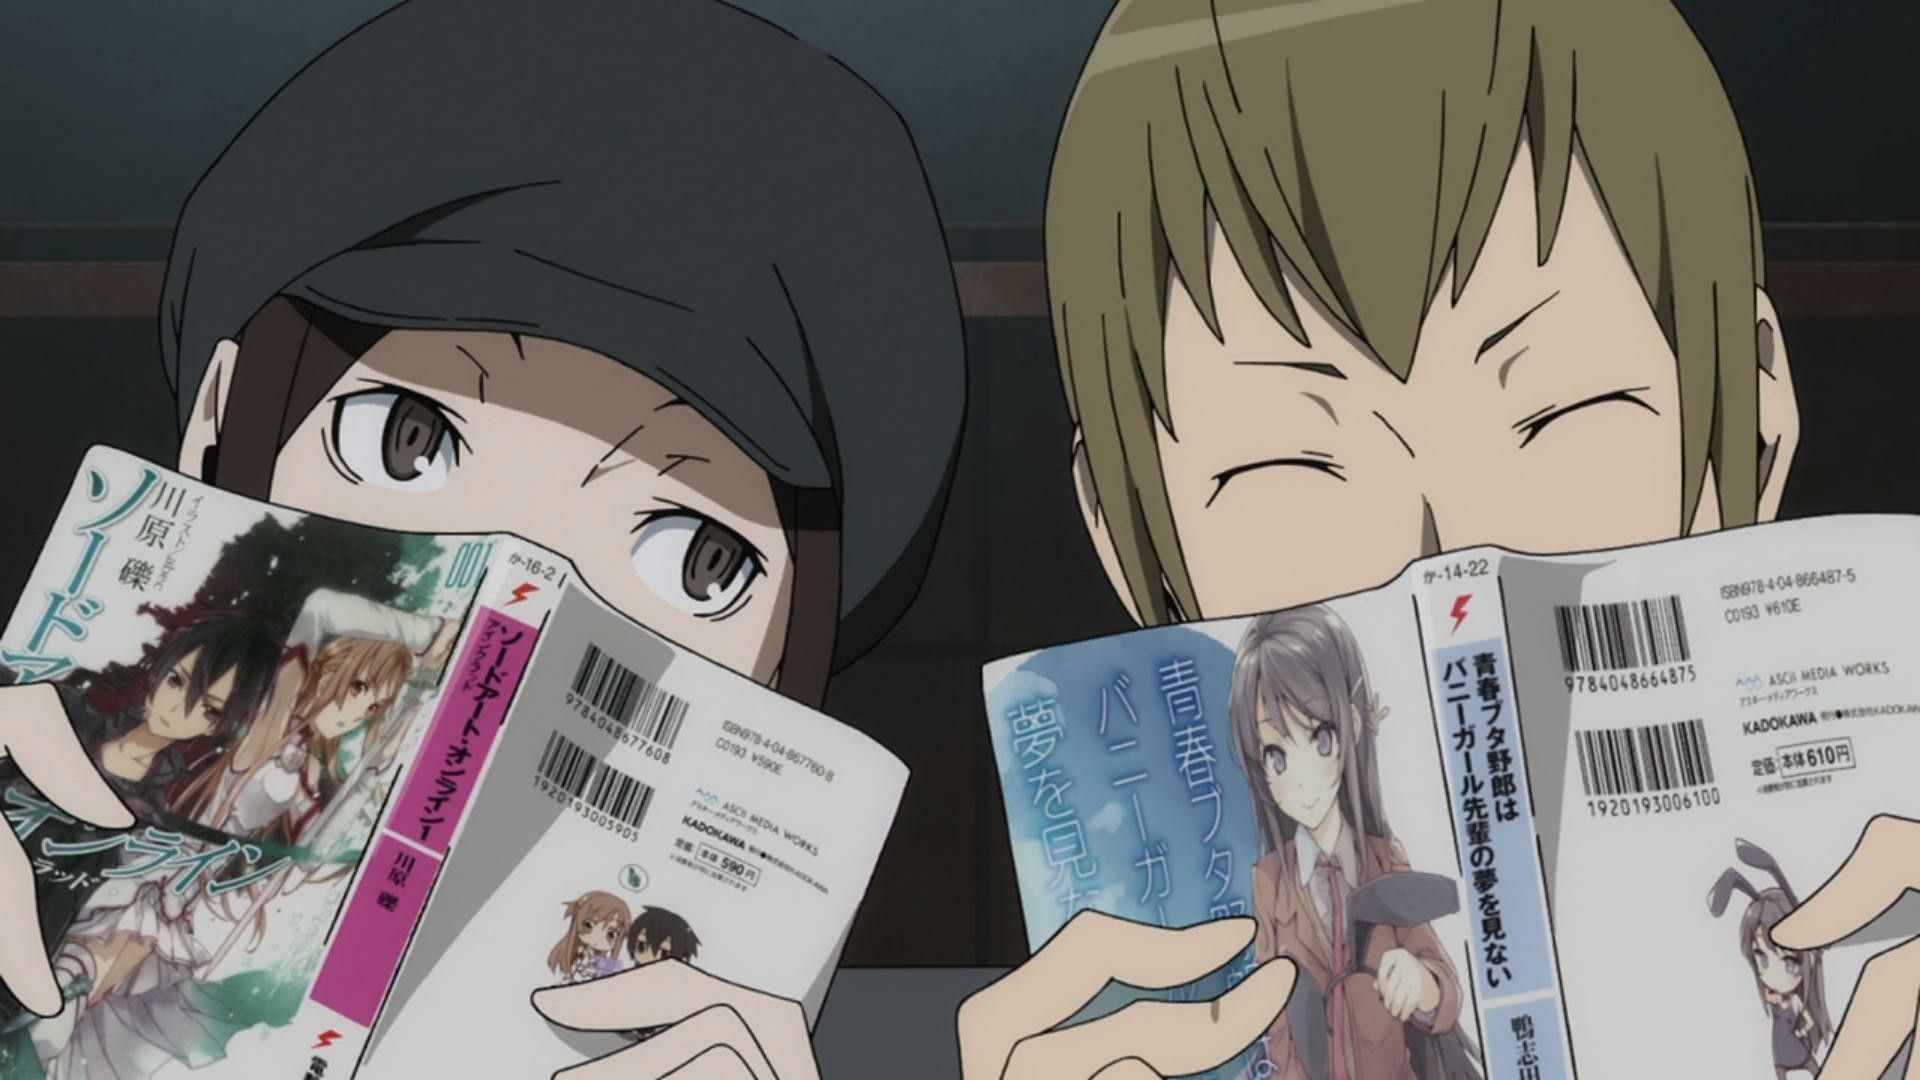 Erika and Walker from the anime Durarara reading manga together.